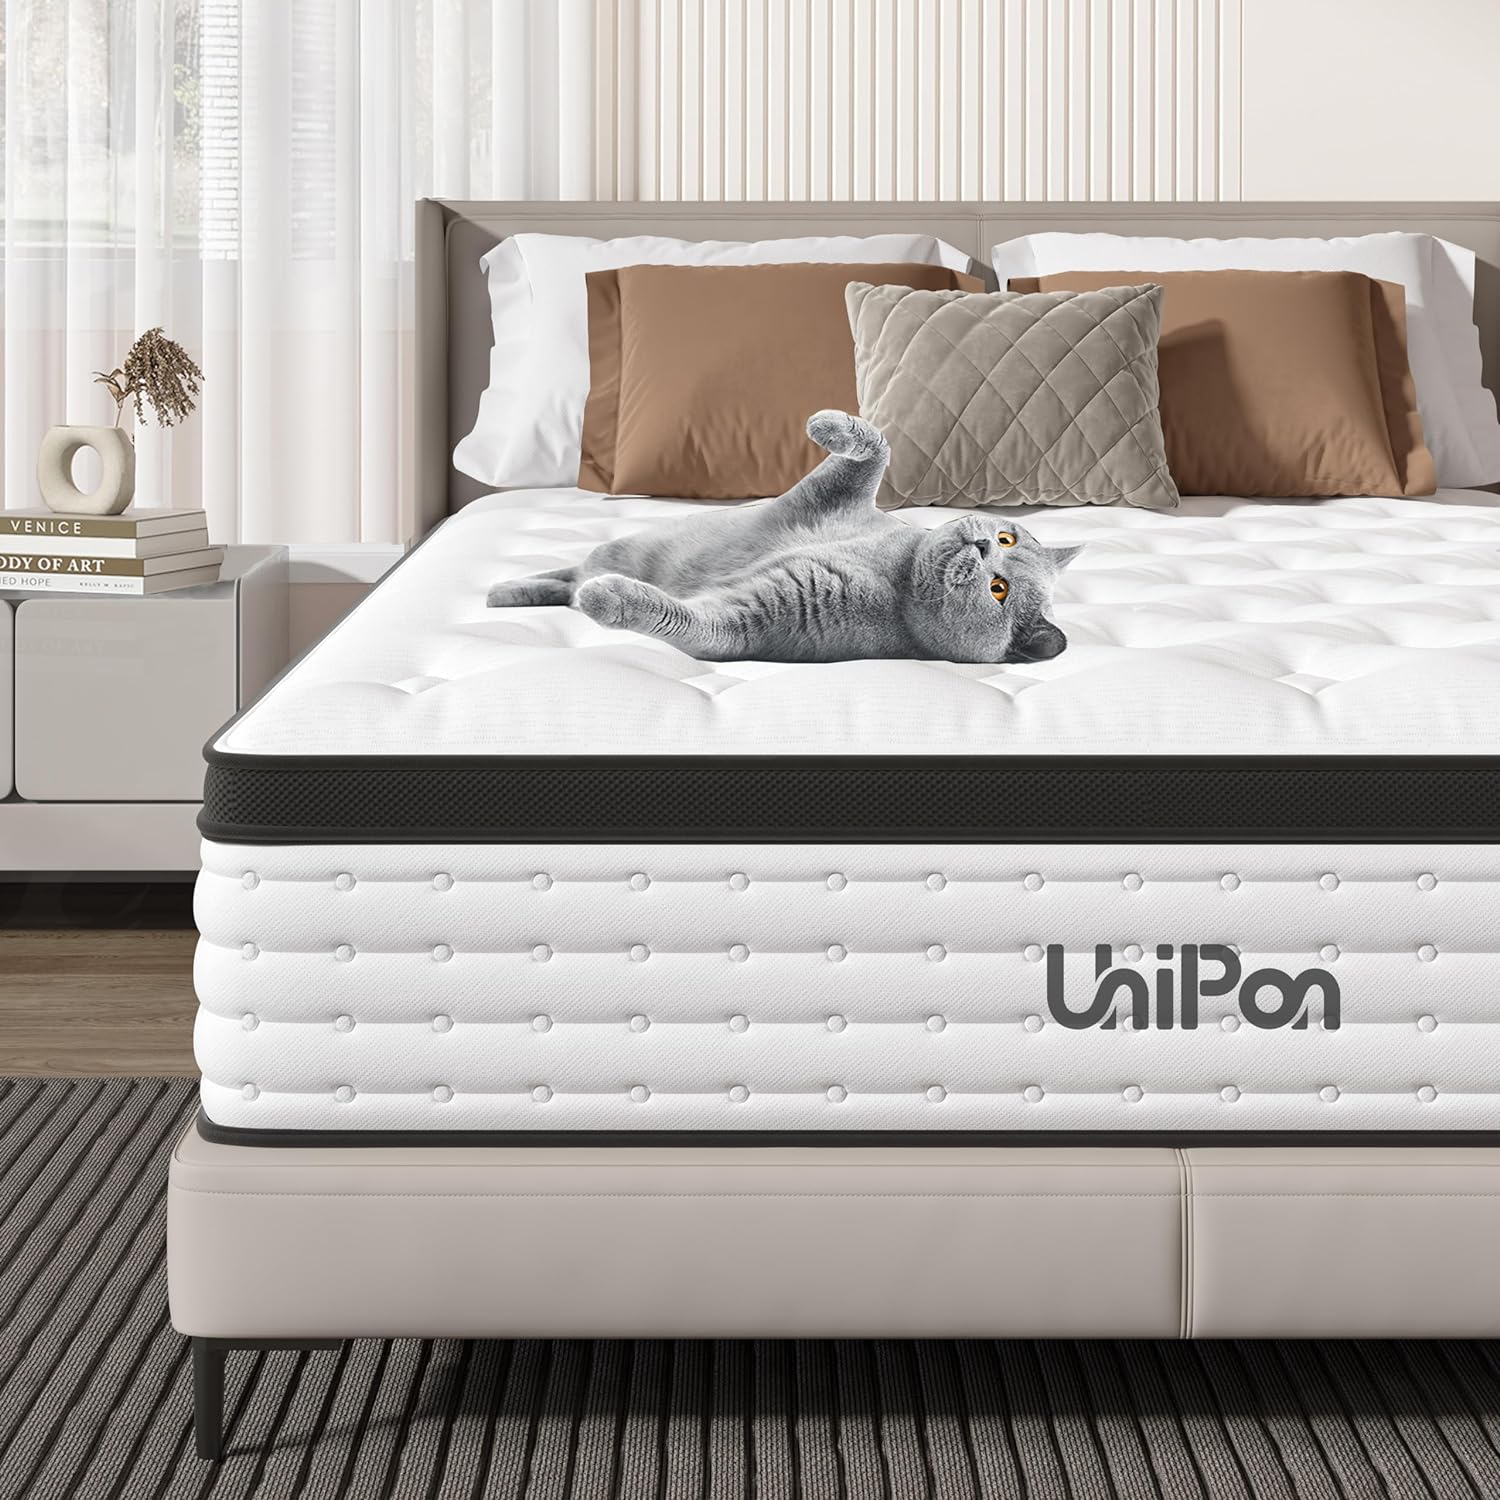 UniPon 14 inches King Size Hybrid Mattress, Medium Firm Mattress with Gel Memory Foam, Pocket Spring Mattress in a Box, 75 * 80 inches